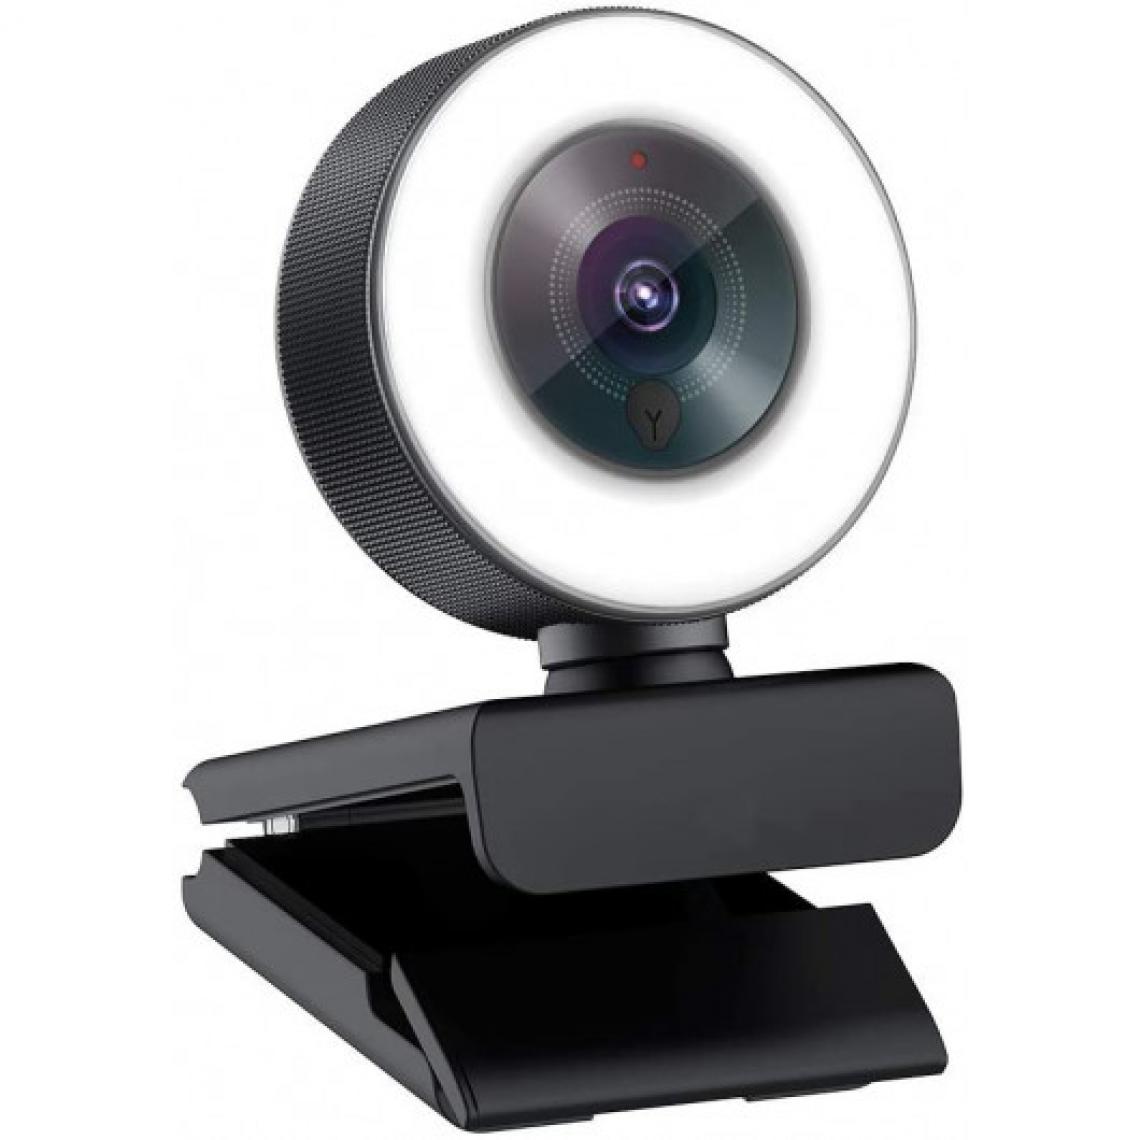 Ofs Selection - Angetube 967, la webcam pour streamer - Webcam